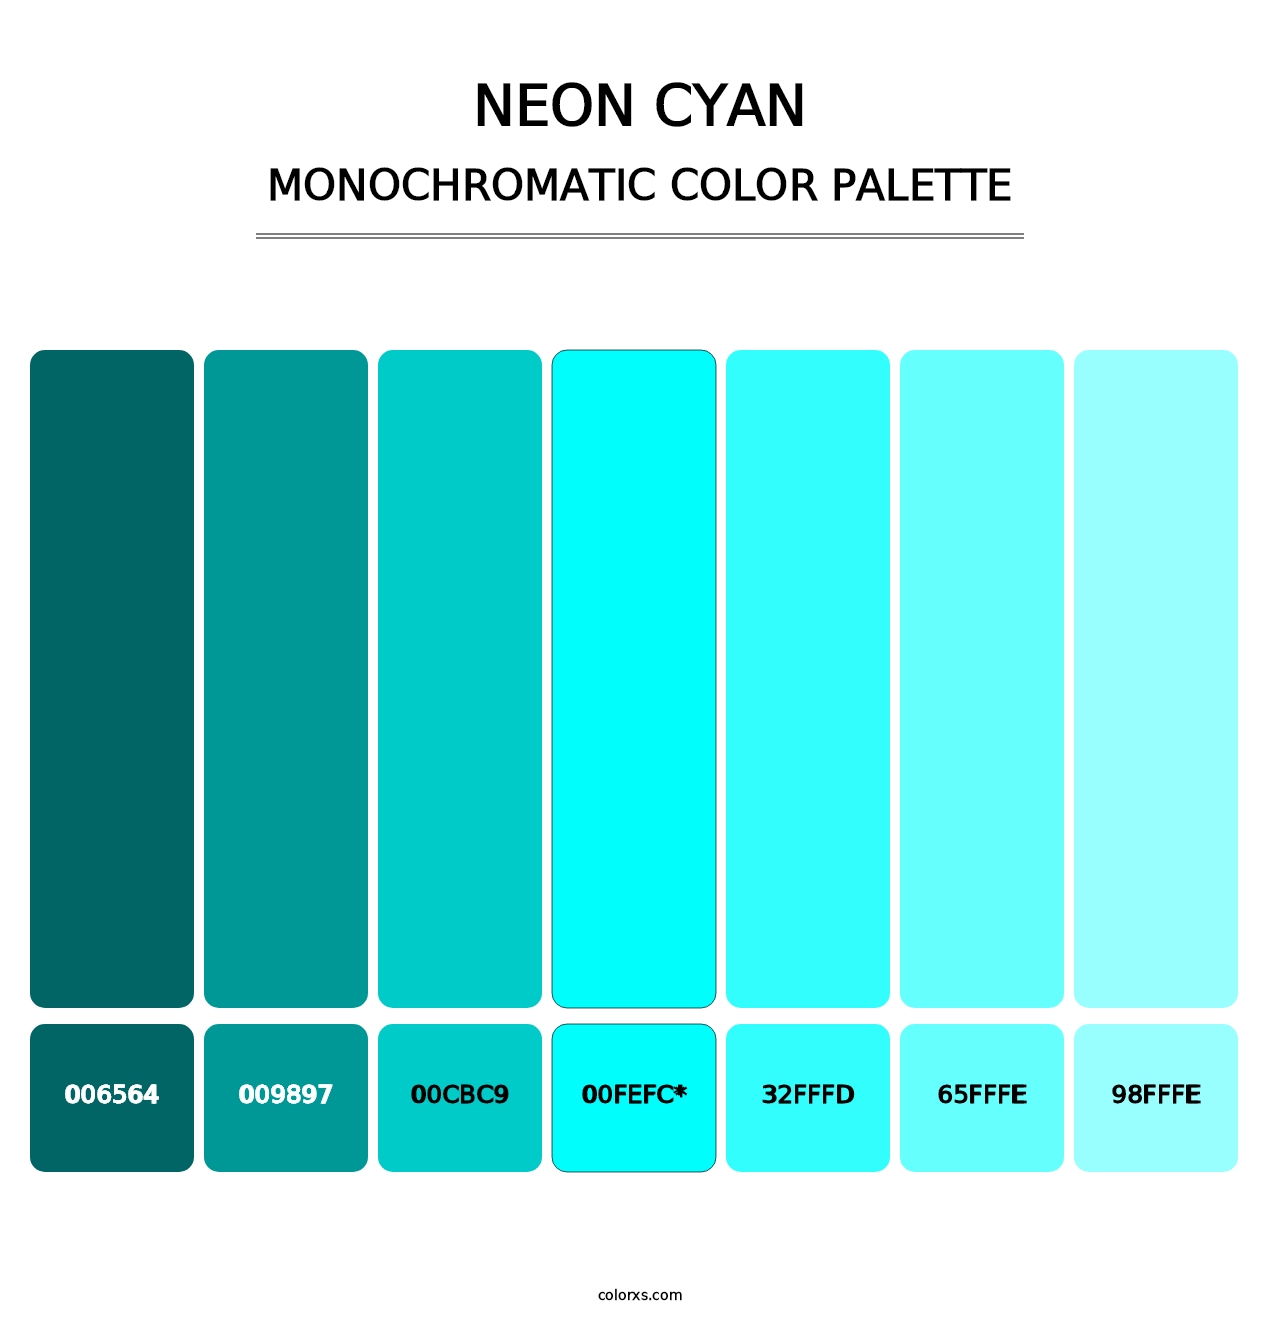 Neon Cyan - Monochromatic Color Palette